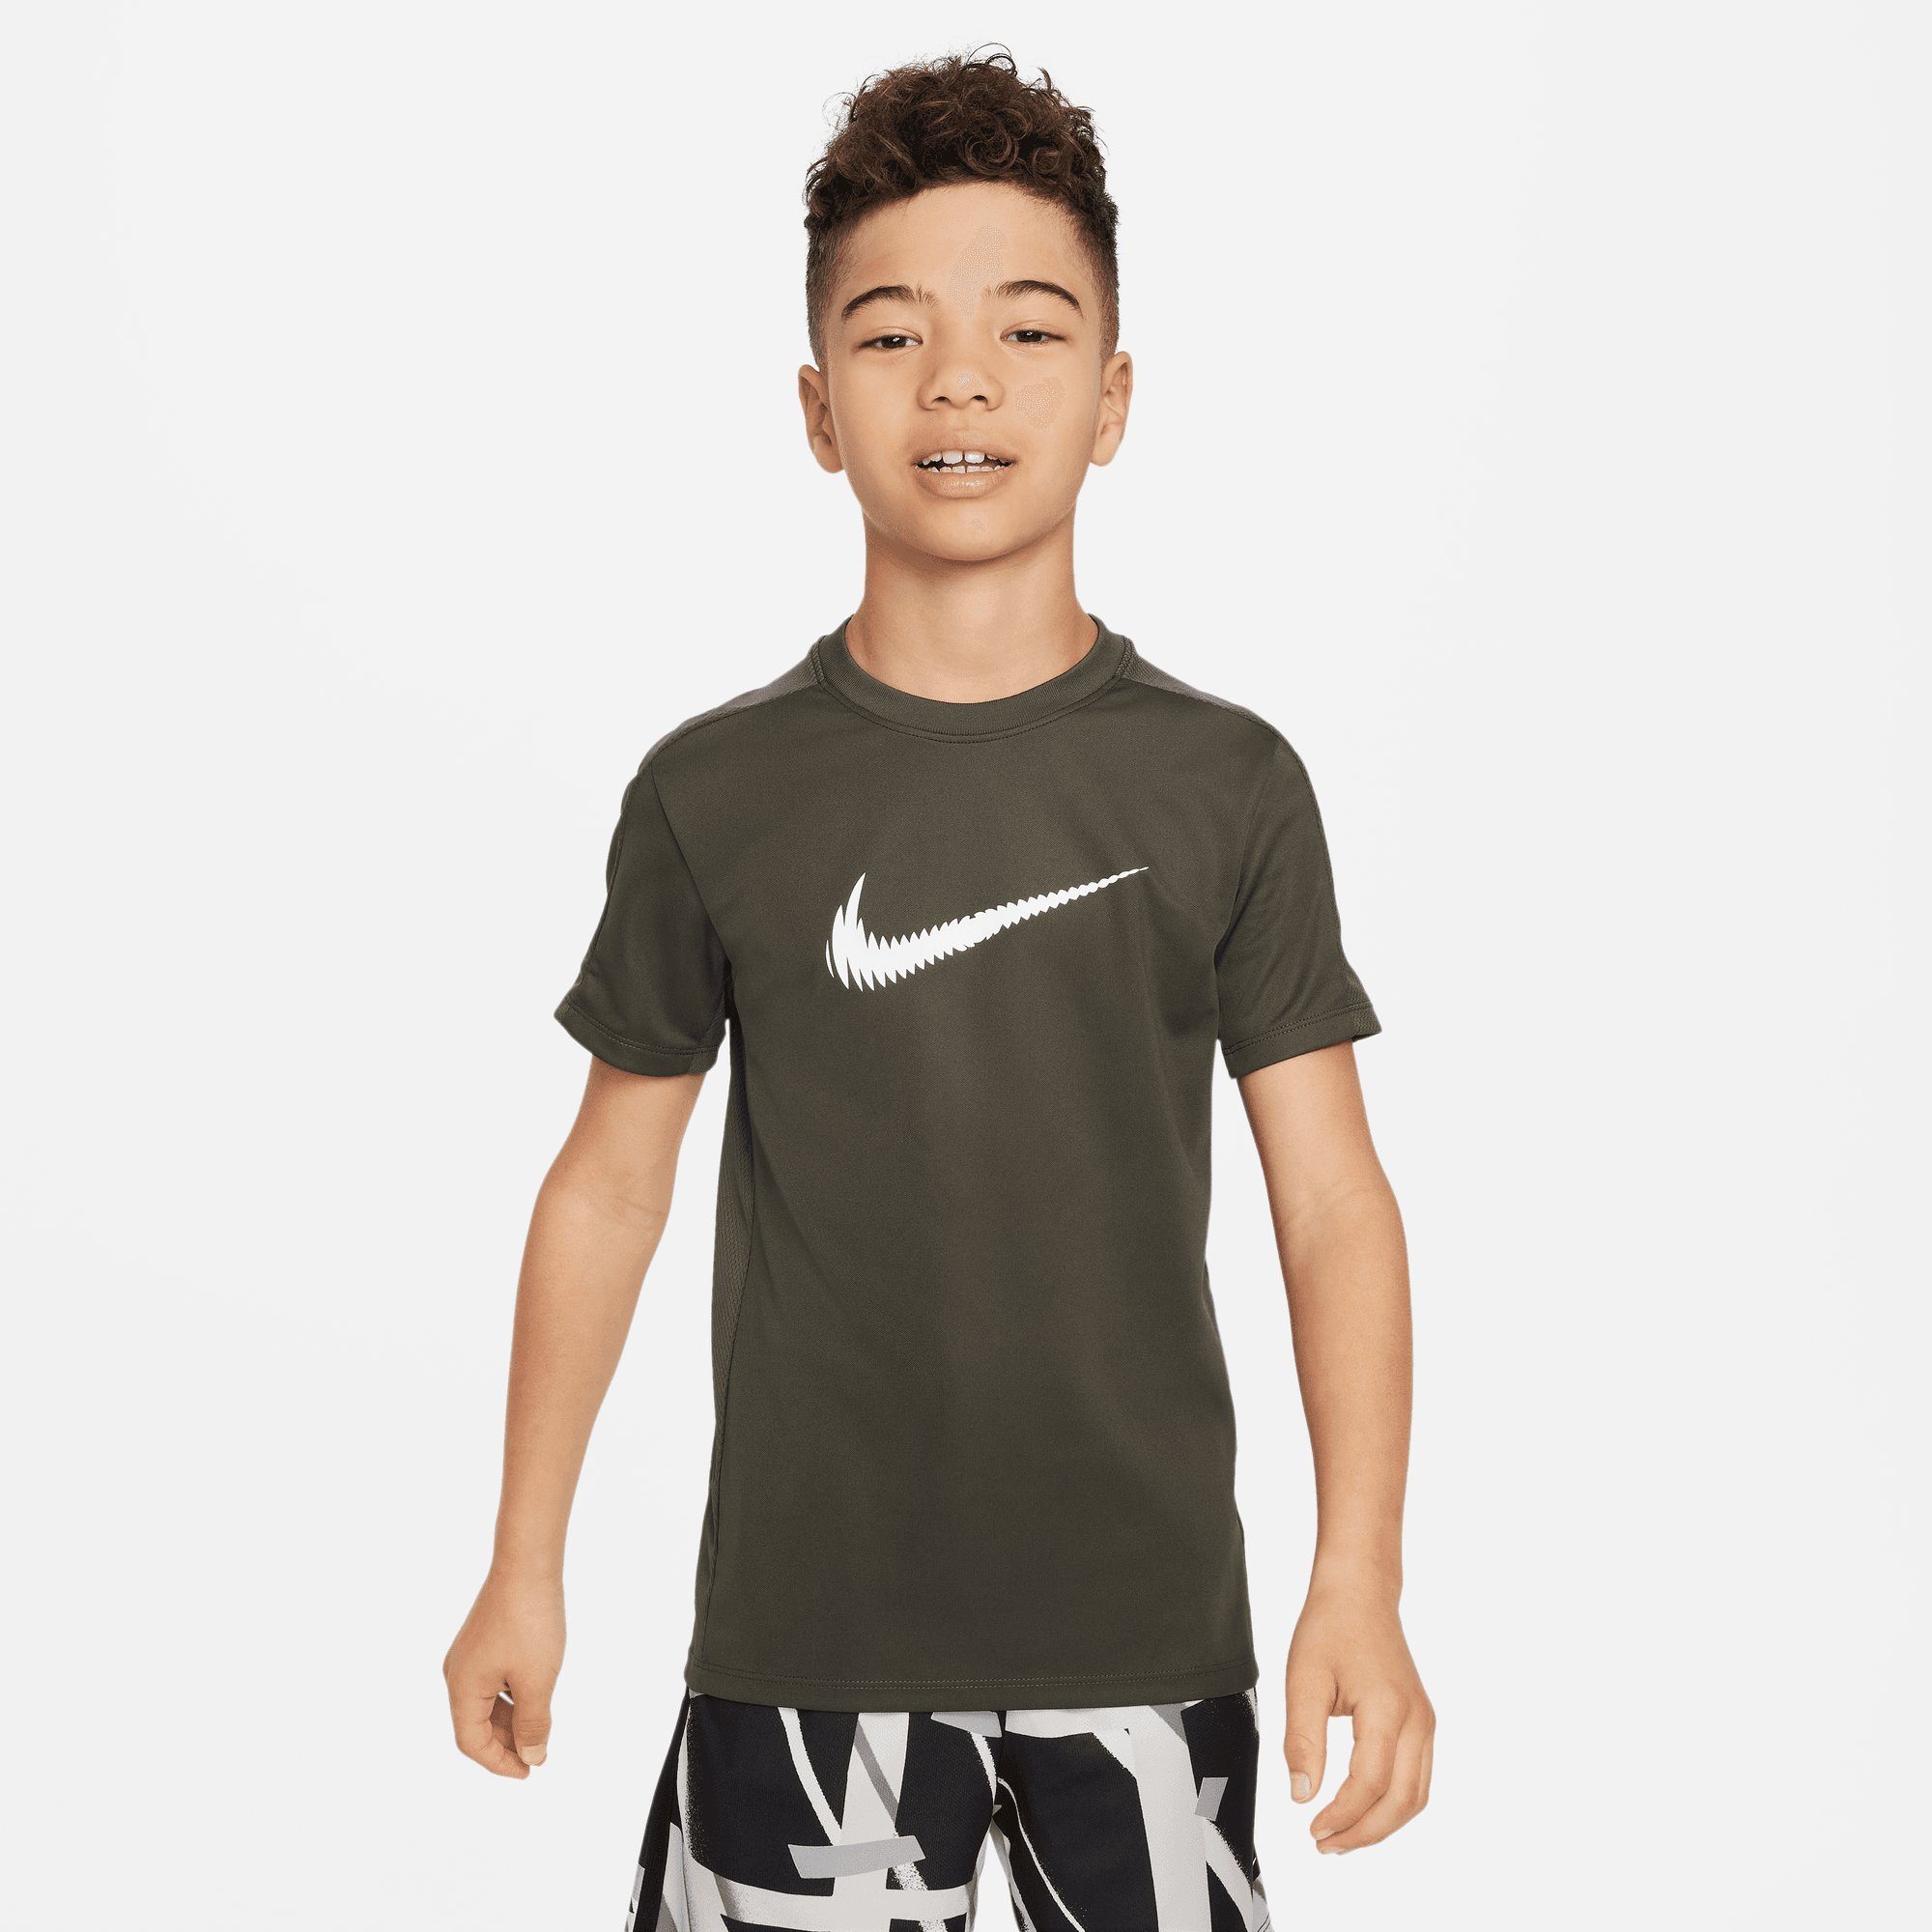 DF NK KHAKI/WHITE Kinder K GX Nike Trainingsshirt - für Short TOP TRPHY Sleeve CARGO